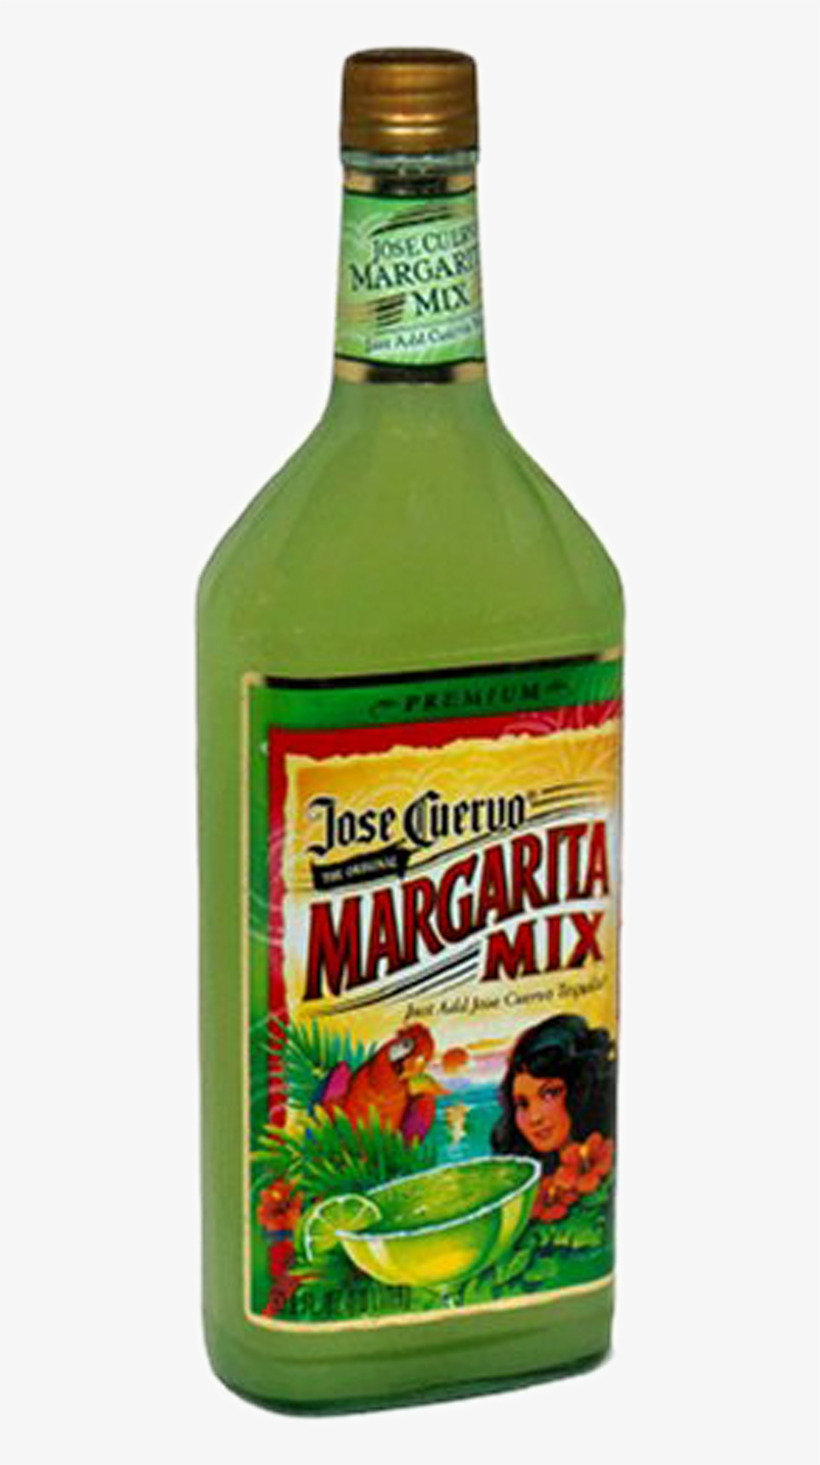 Jose Cuervo Margarita Mix 1ltr mexico.